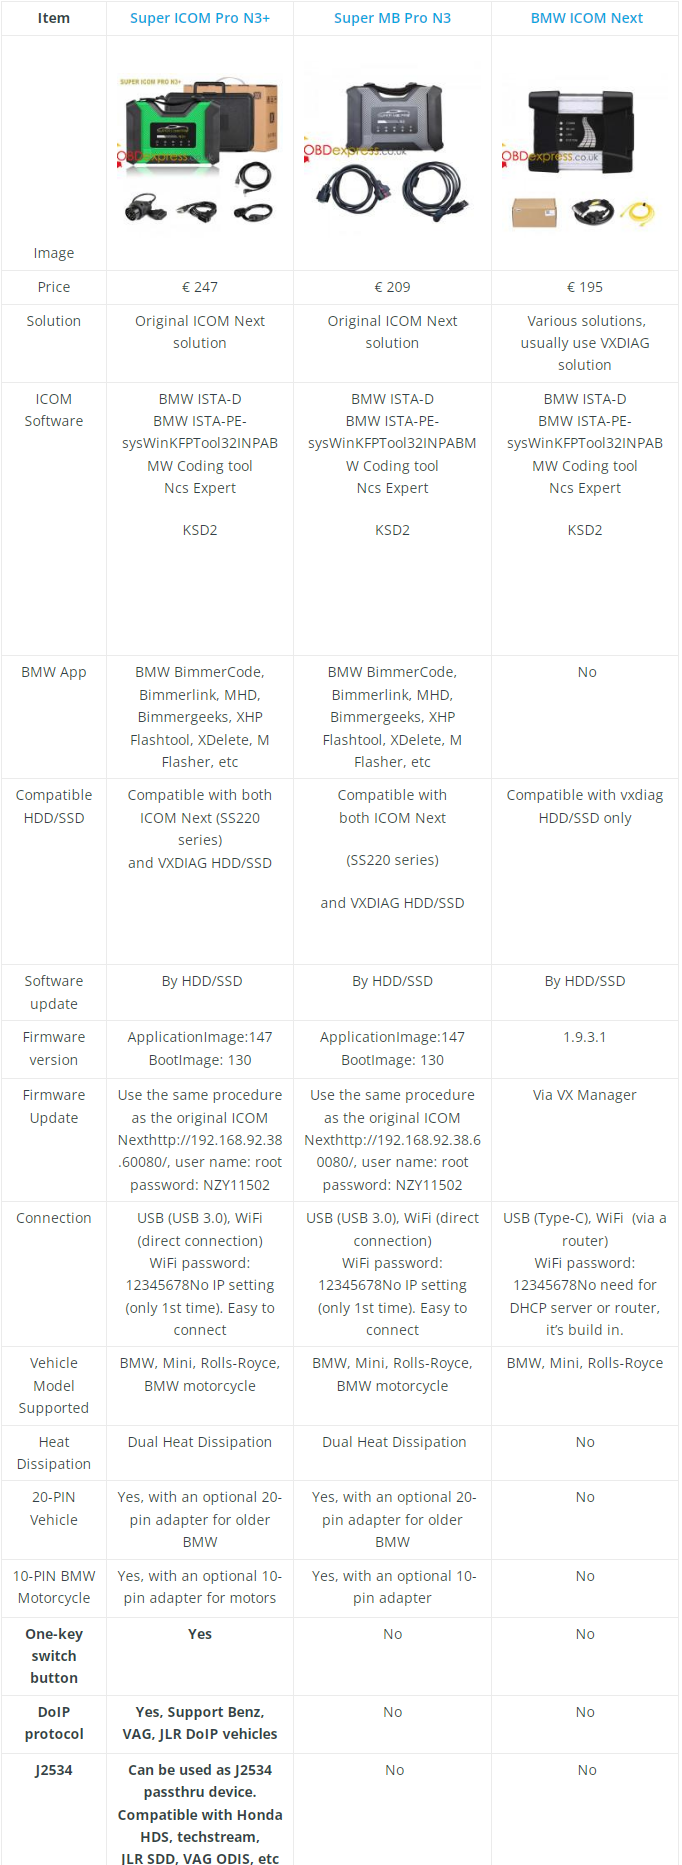 Super ICOM Pro N3+ vs. Super MB Pro N3 vs. BMW ICOM Next